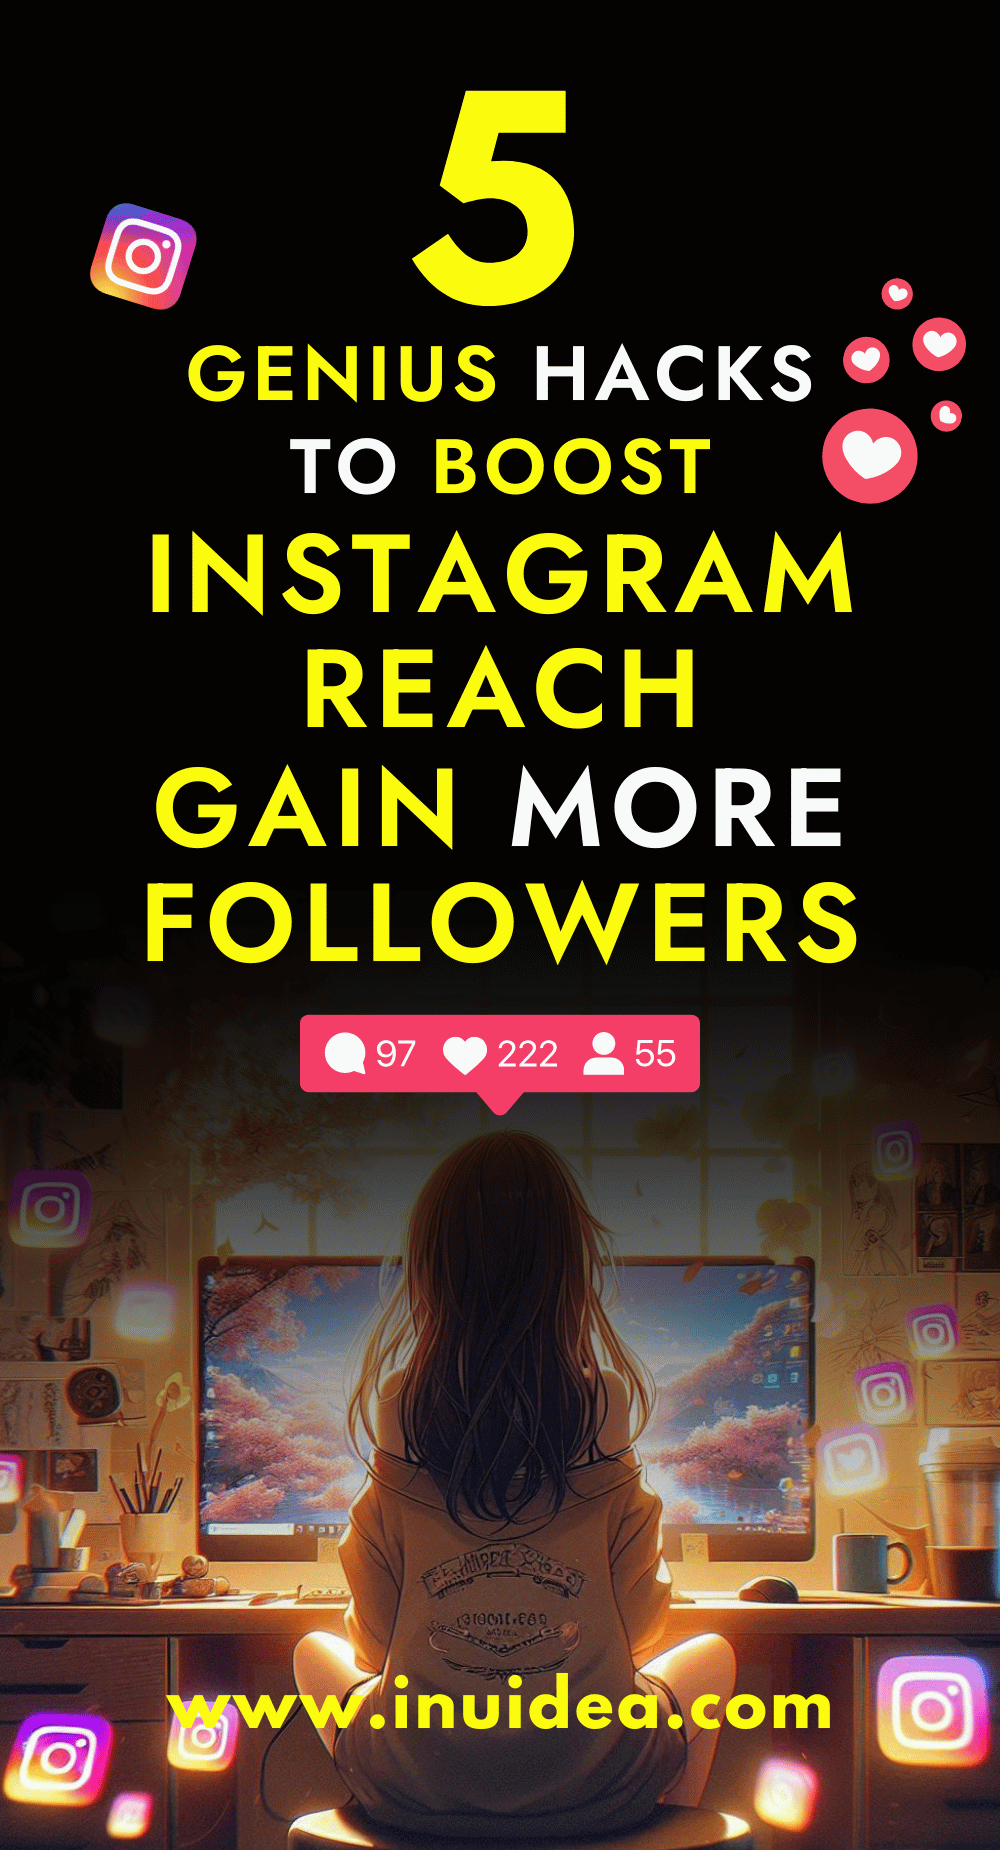 5 Genius Hacks To Boost Instagram Reach And Gain More Followers - Inu Etc